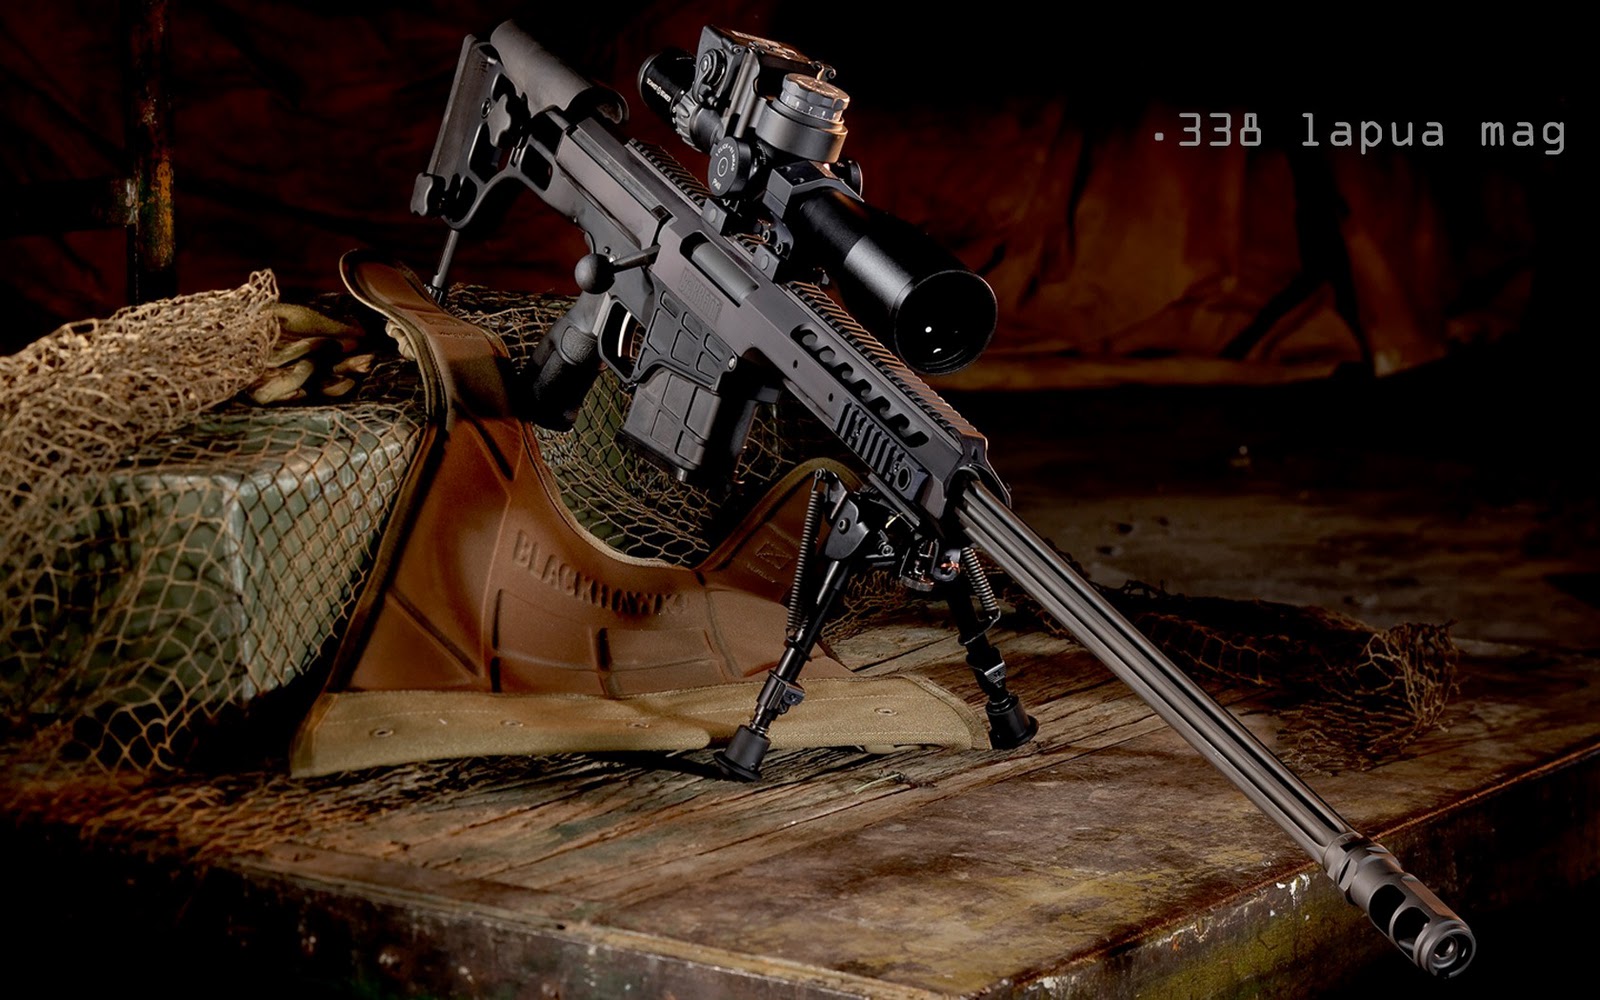 Barett 98b Lapua HD Sniper Wallpaper Military